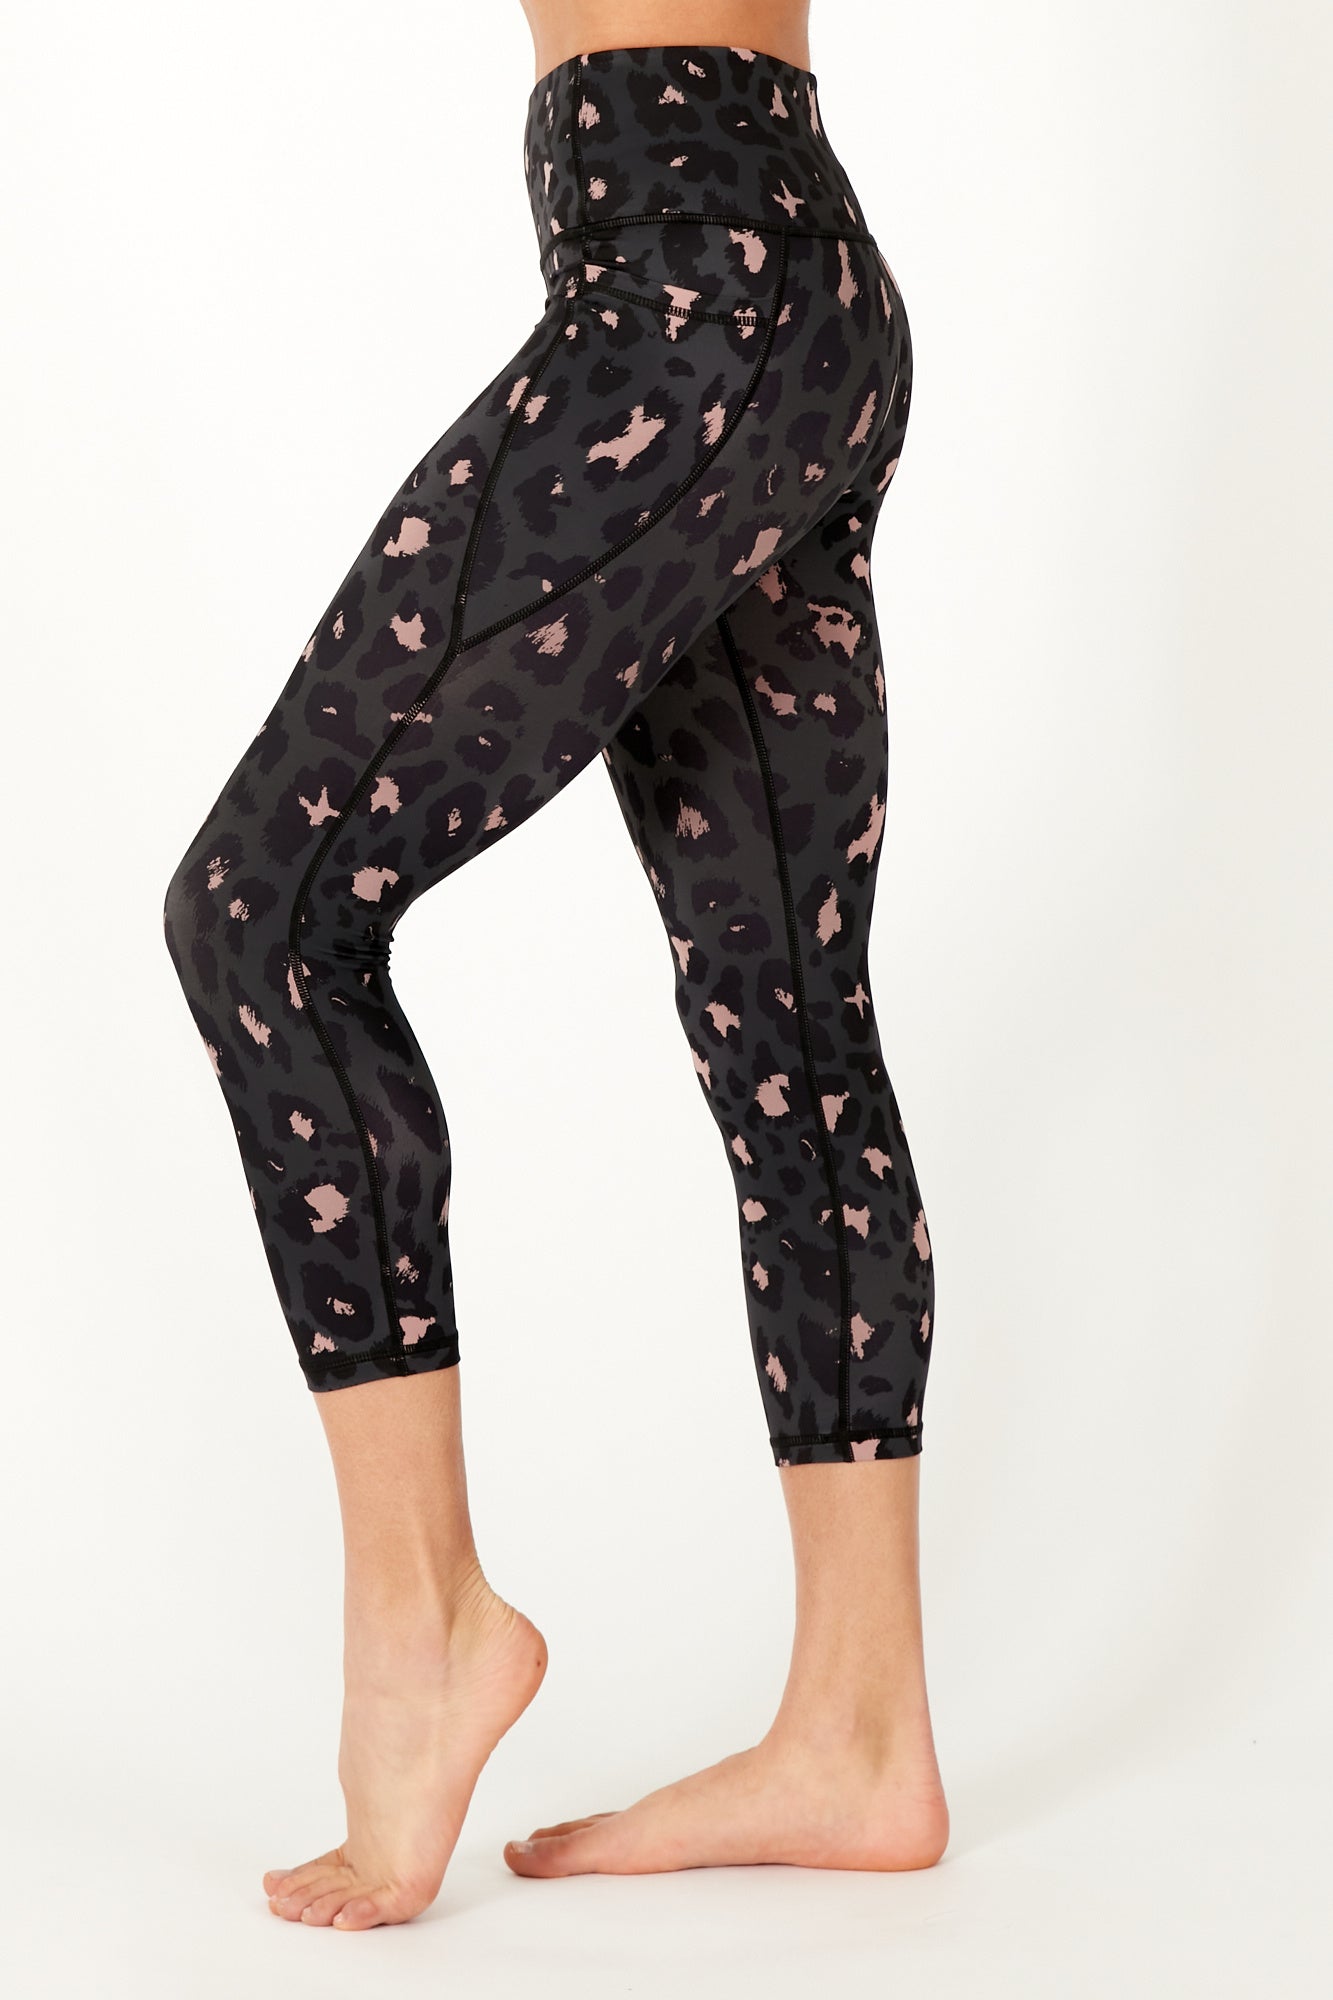 7/8 Length Blush Pink Leopard Print Leggings with Hidden Waistband